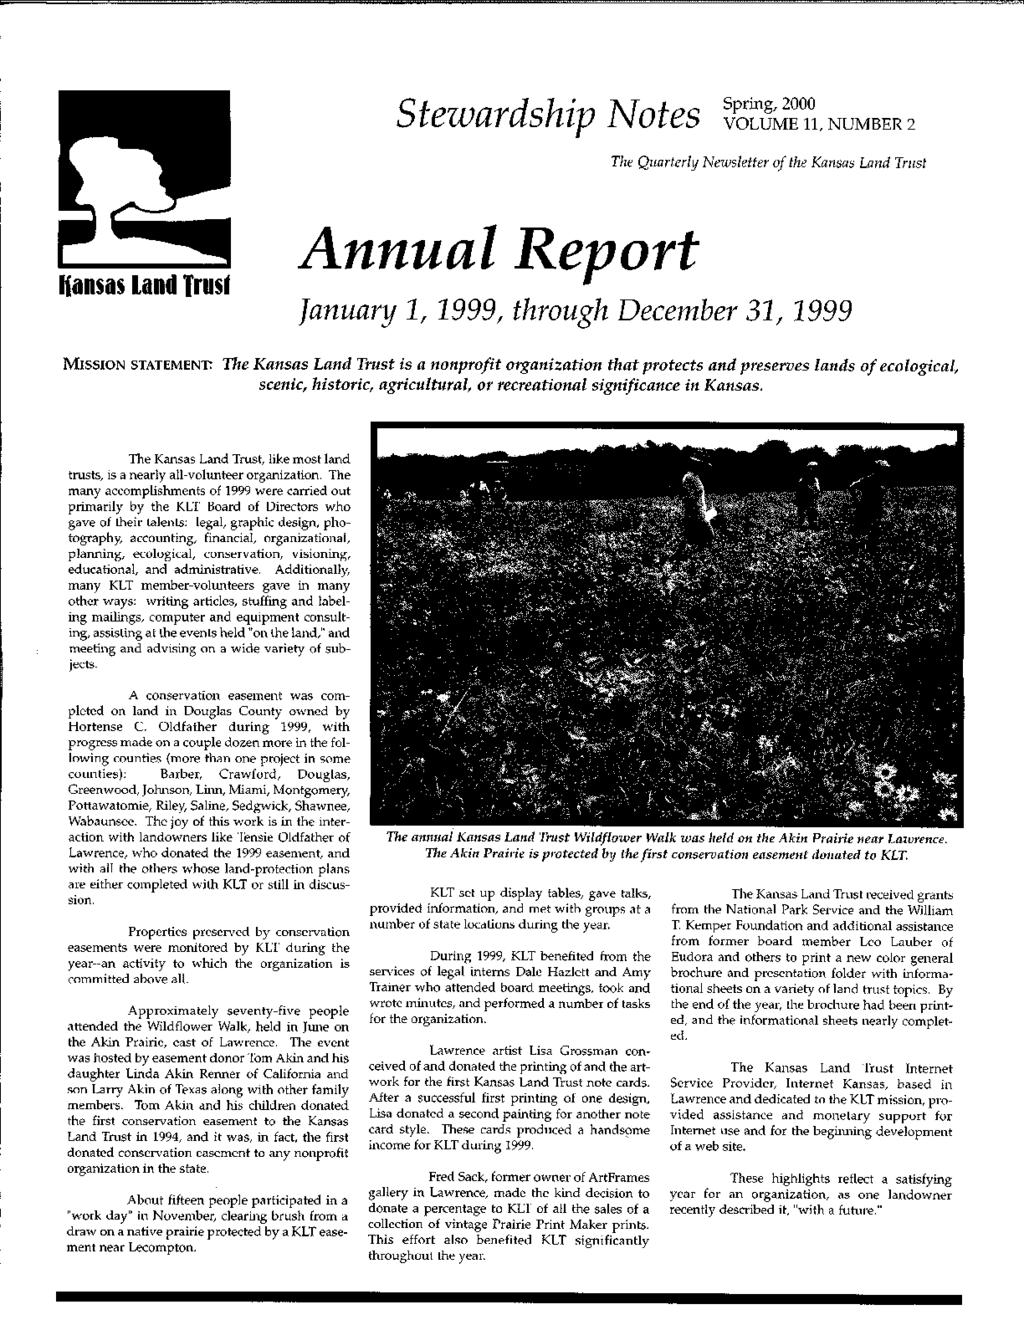 Stezvardship }Votes Spring, 2000 VOLUME 11, NUMBER 2 The Quarterly Newsletter of the Kansas Land Trust Hansas land Trus' Annual Report January 1, 1999, through December 31, 1999 MISSION STATEMENT: